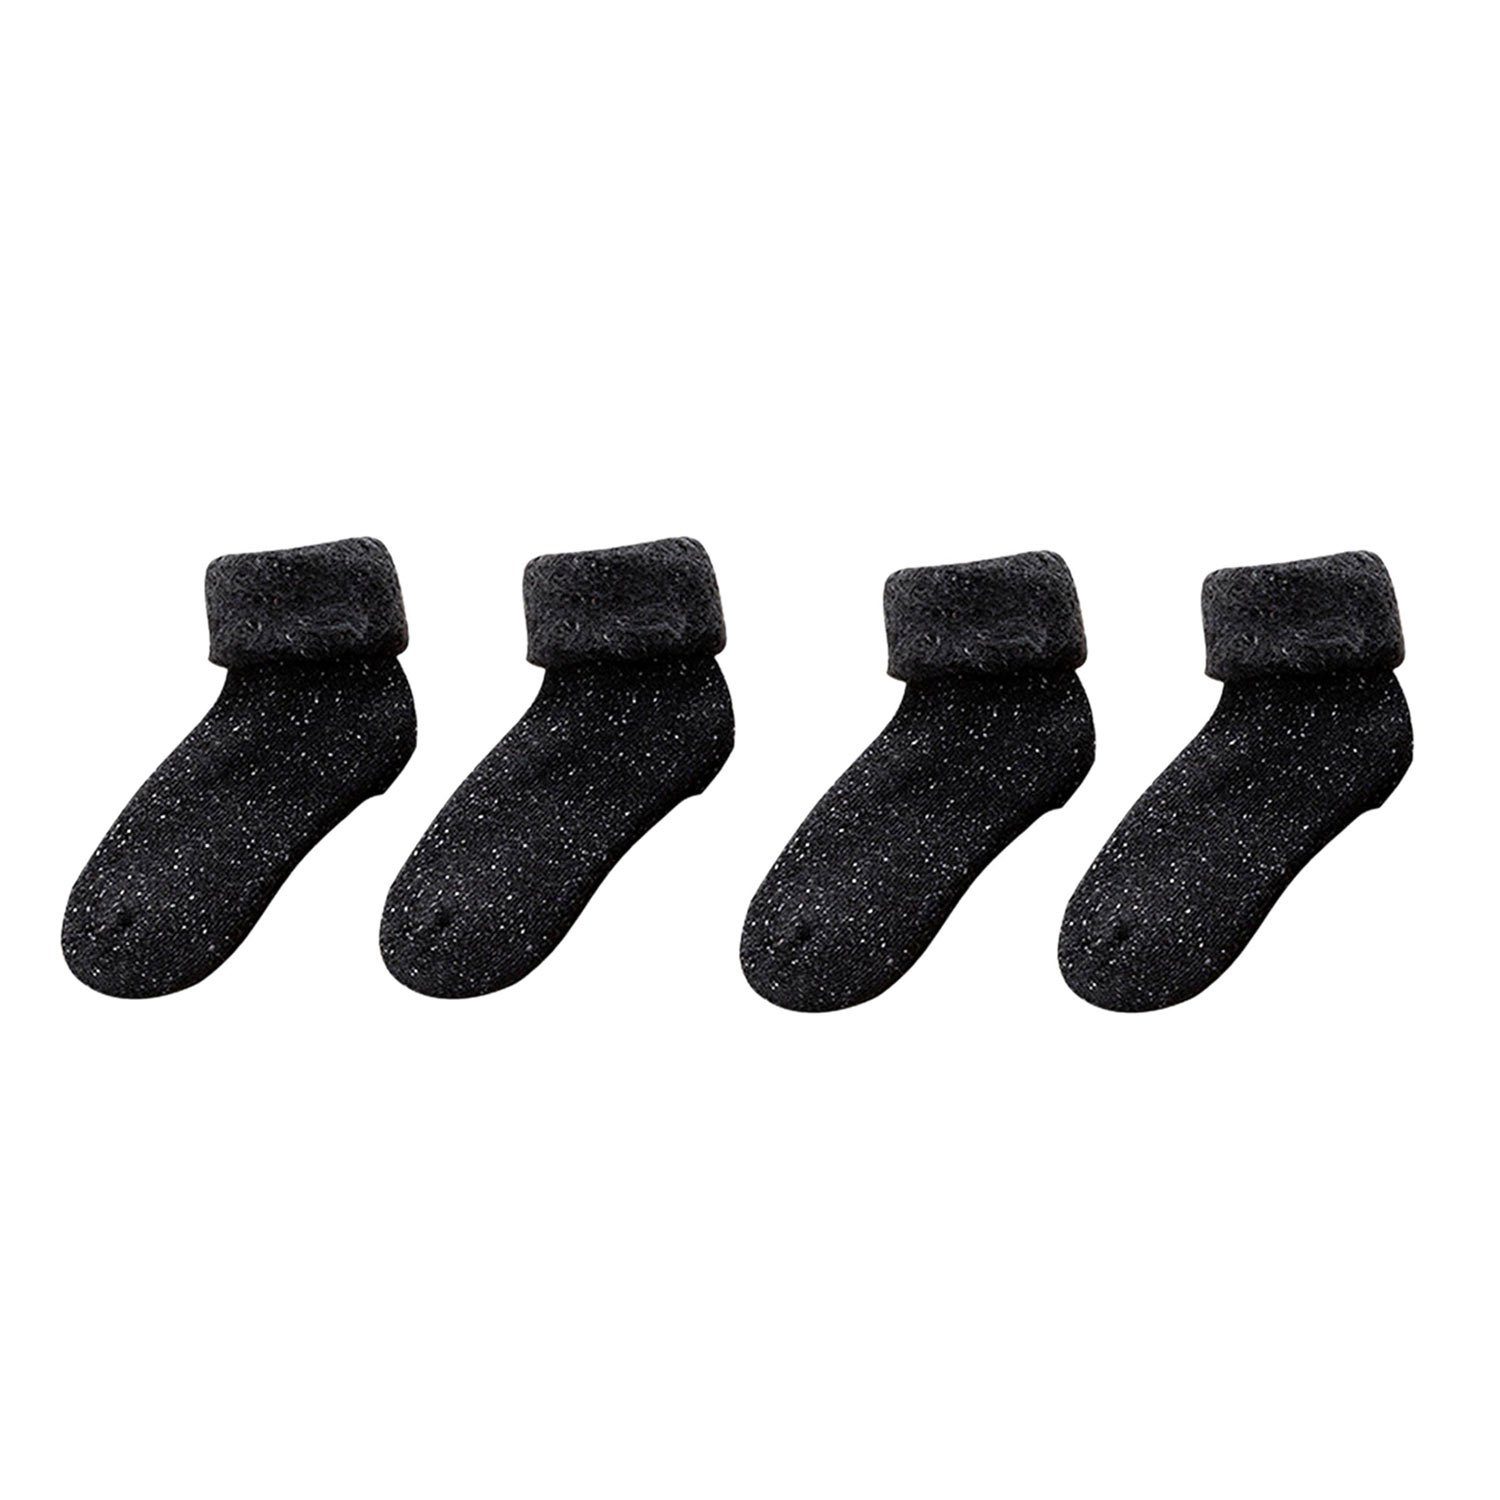 MAGICSHE Thermosocken 2 Paar Damen Socken aus Merinowolle Verdickte warme Skisocken schwarz